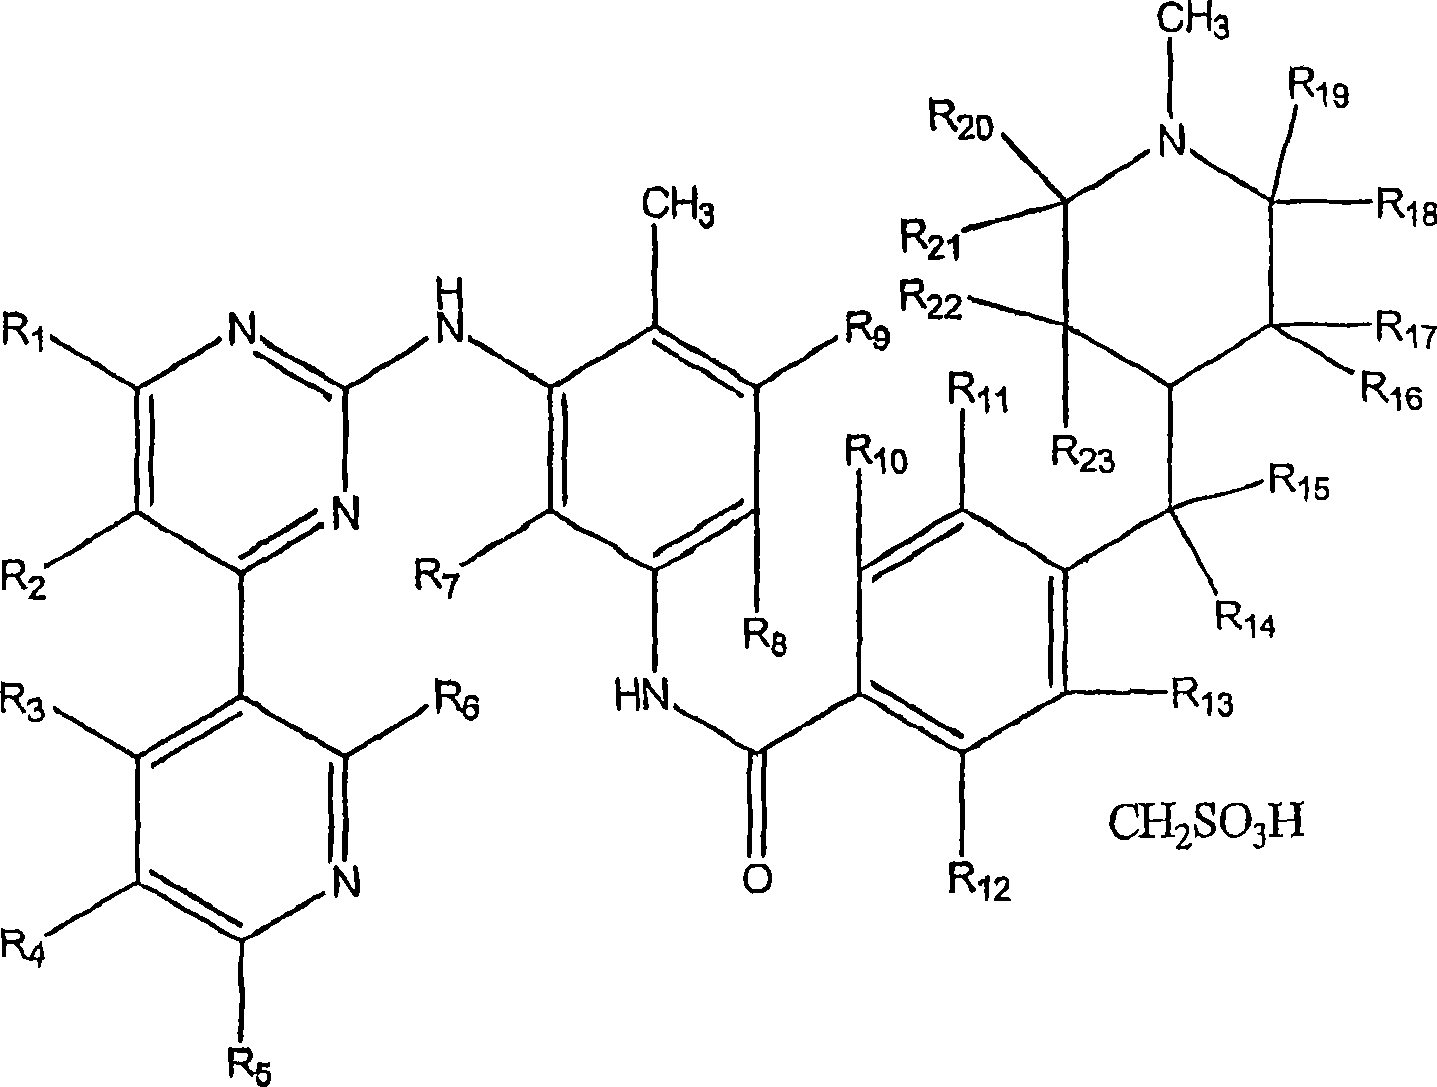 Nanoparticulate imatinib mesylate formulations